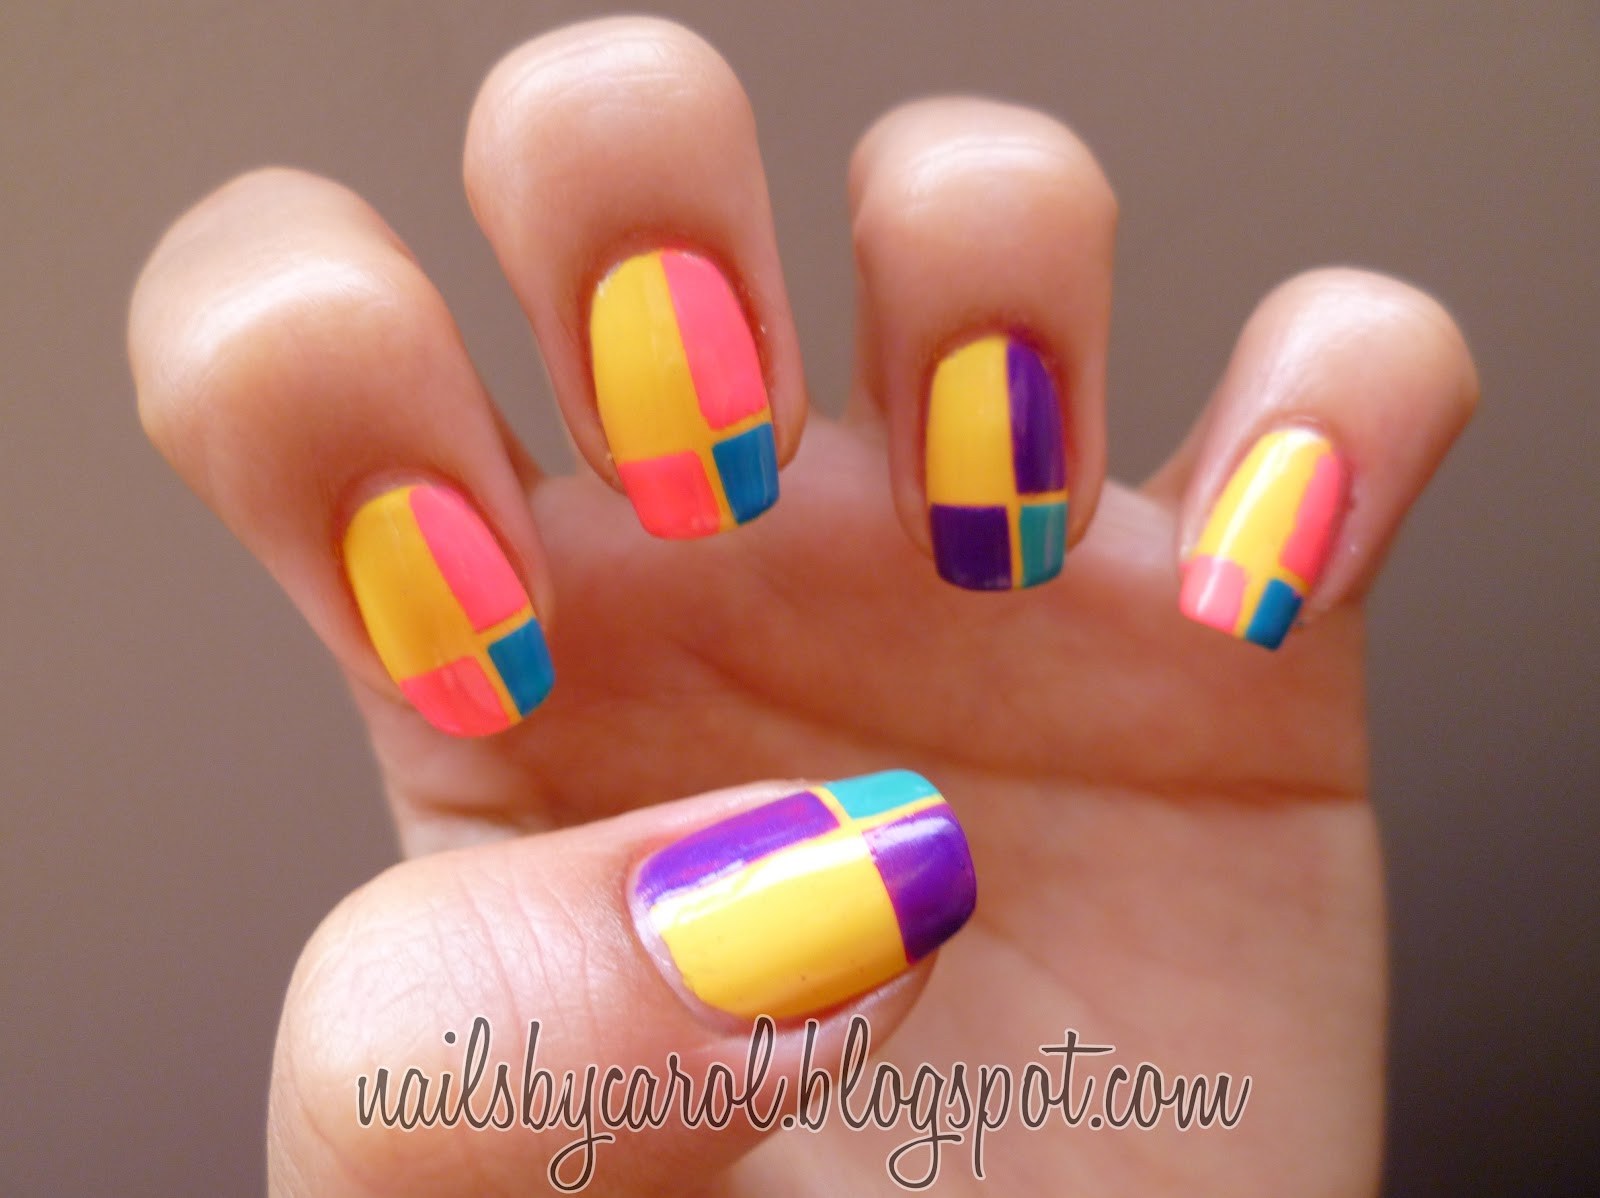 Nails by Carol: Geometric & Neon Manicure